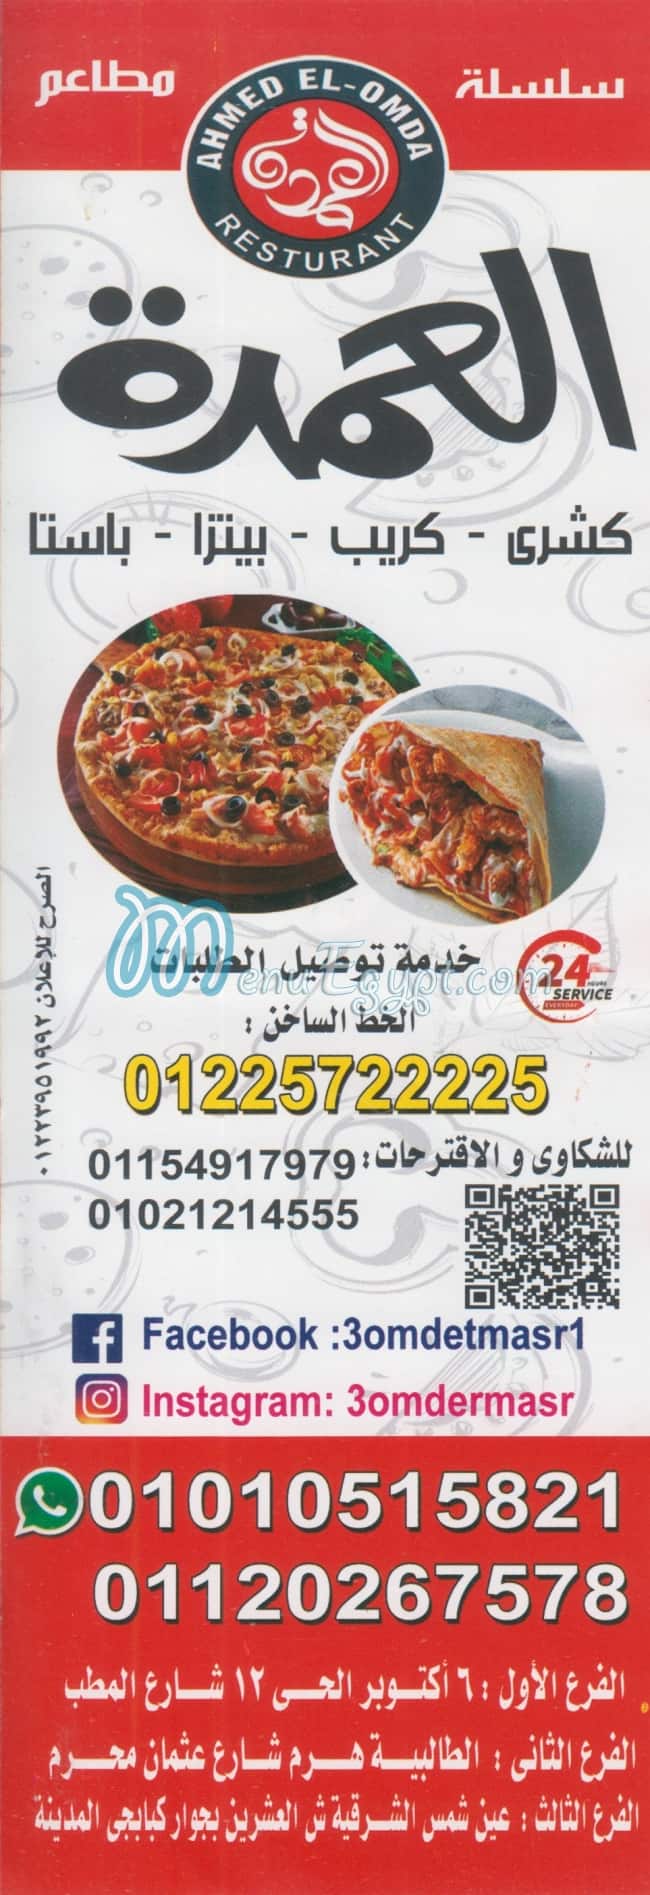 Koshary El Omda menu